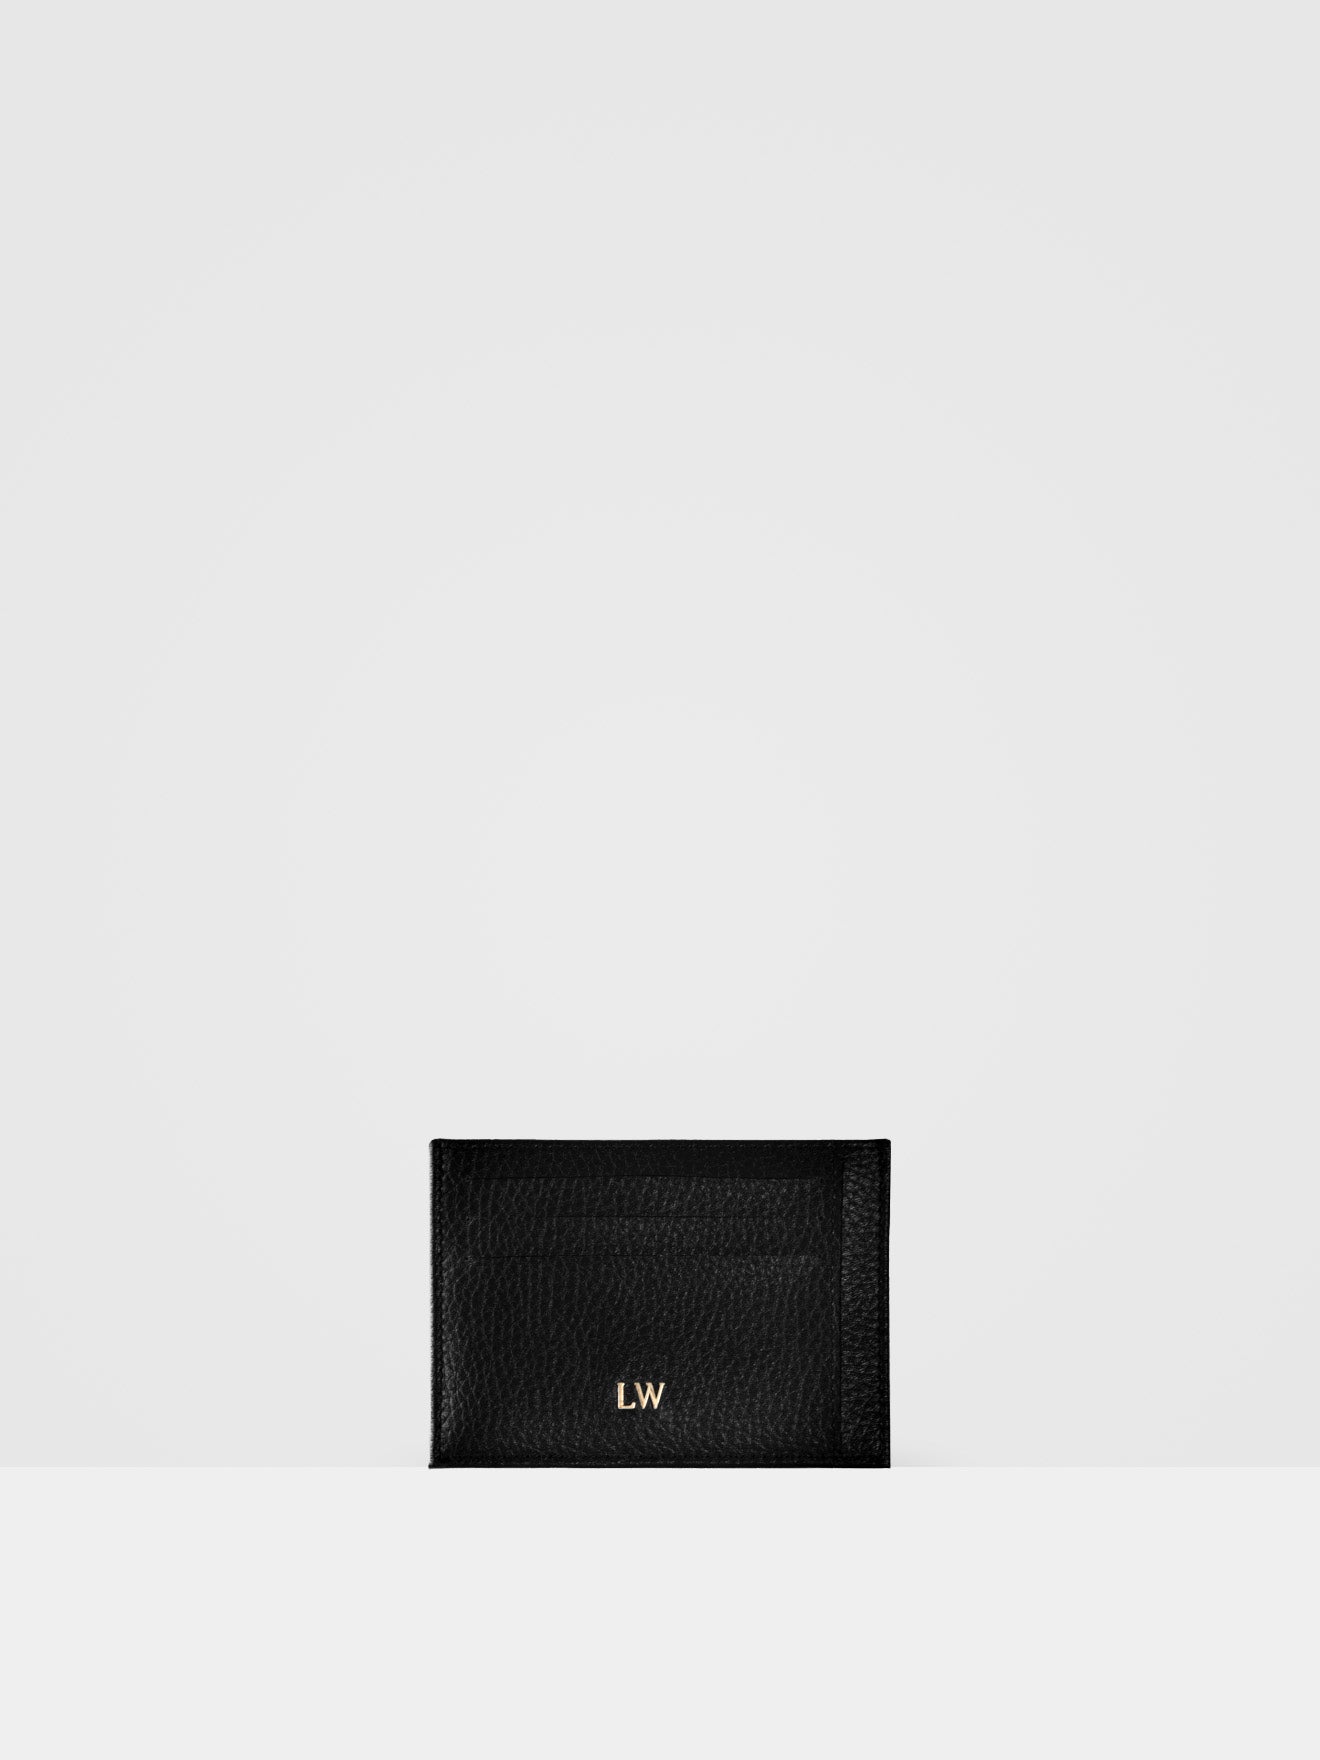 Zip Wallet Black & Cream Stripes - Iris Boutique